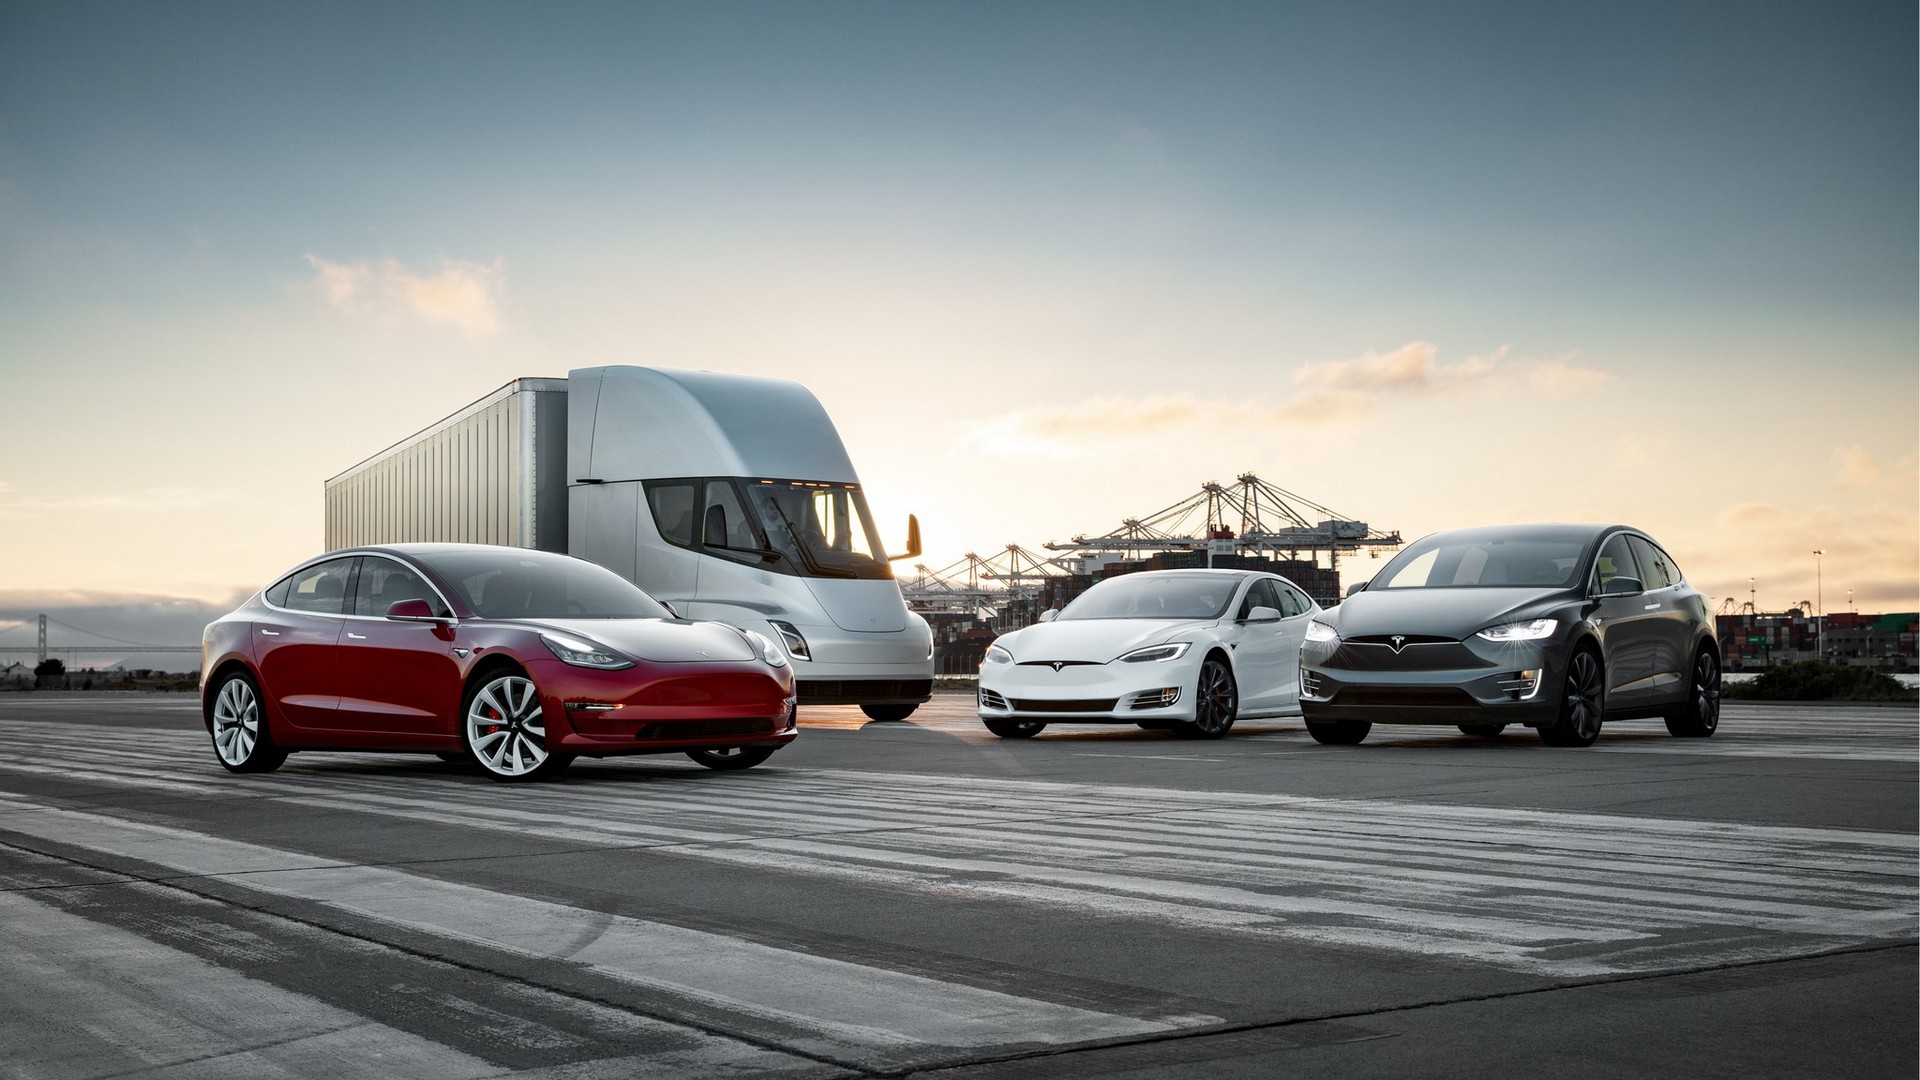 Tesla Model S 3 X And Semi Unite In New Photo